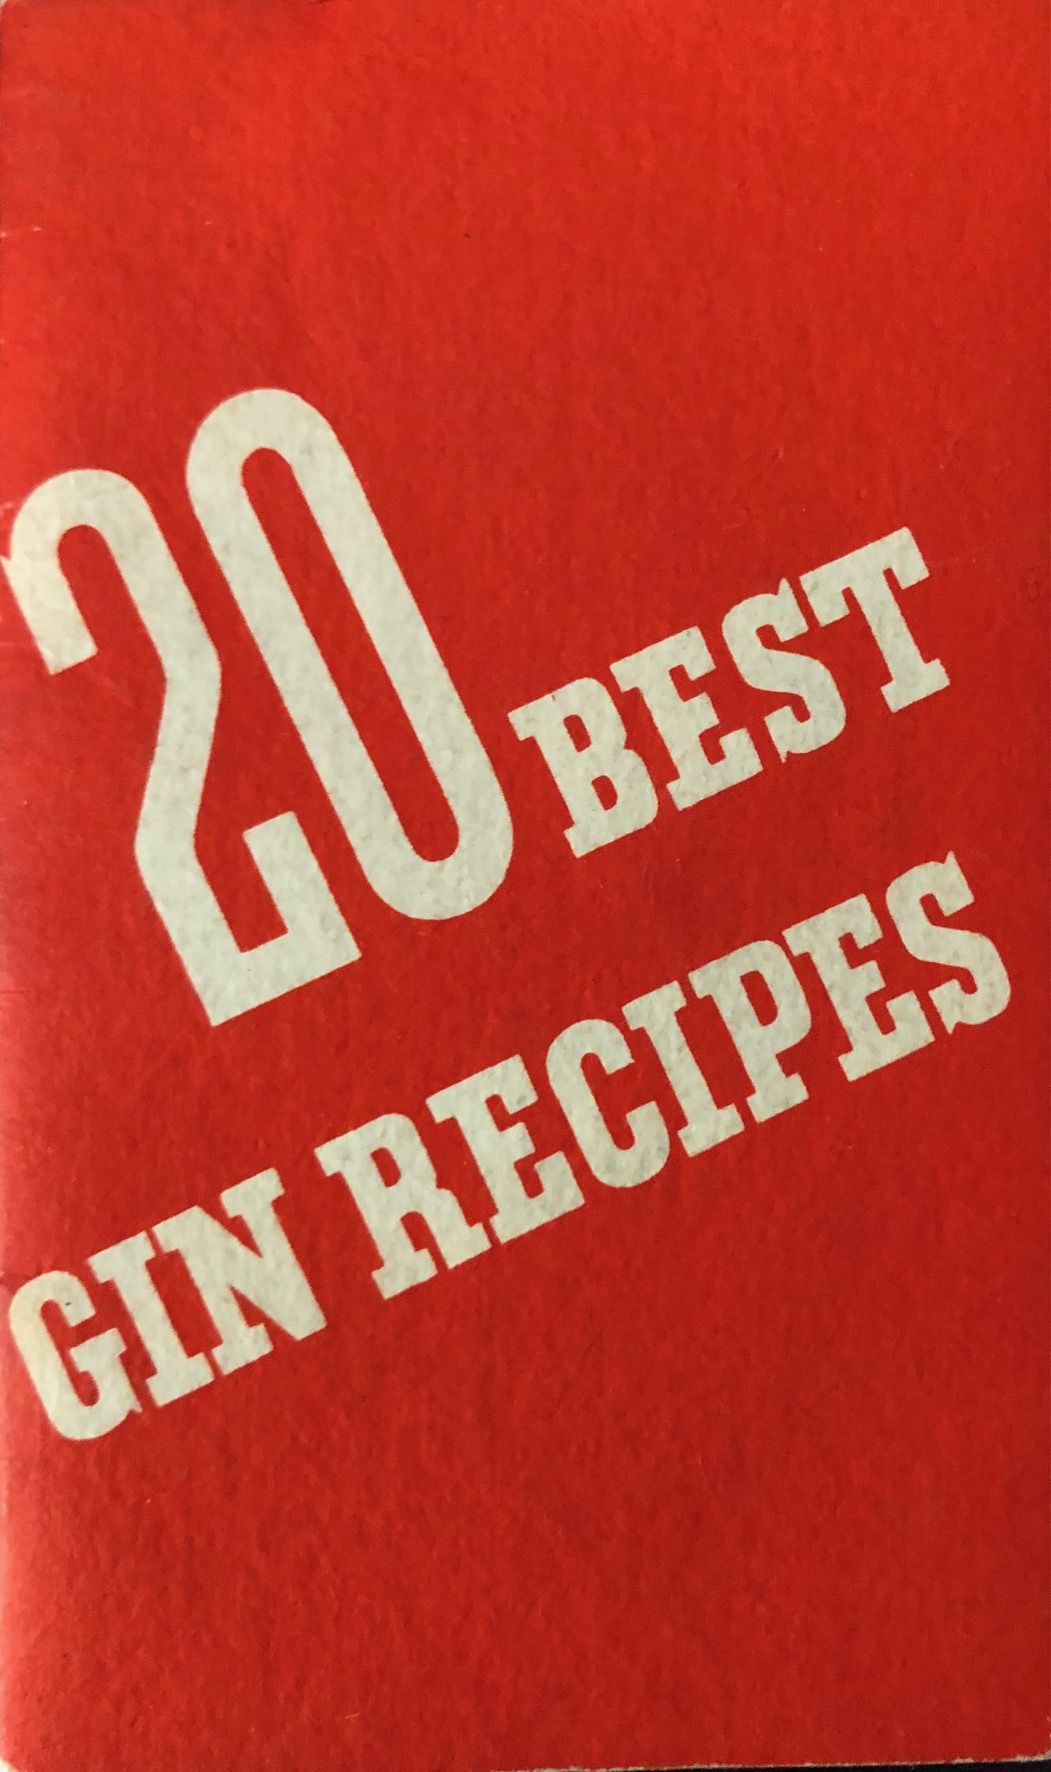 (Cocktails - Gin) Gordon's. 20 Best Gin Recipes.